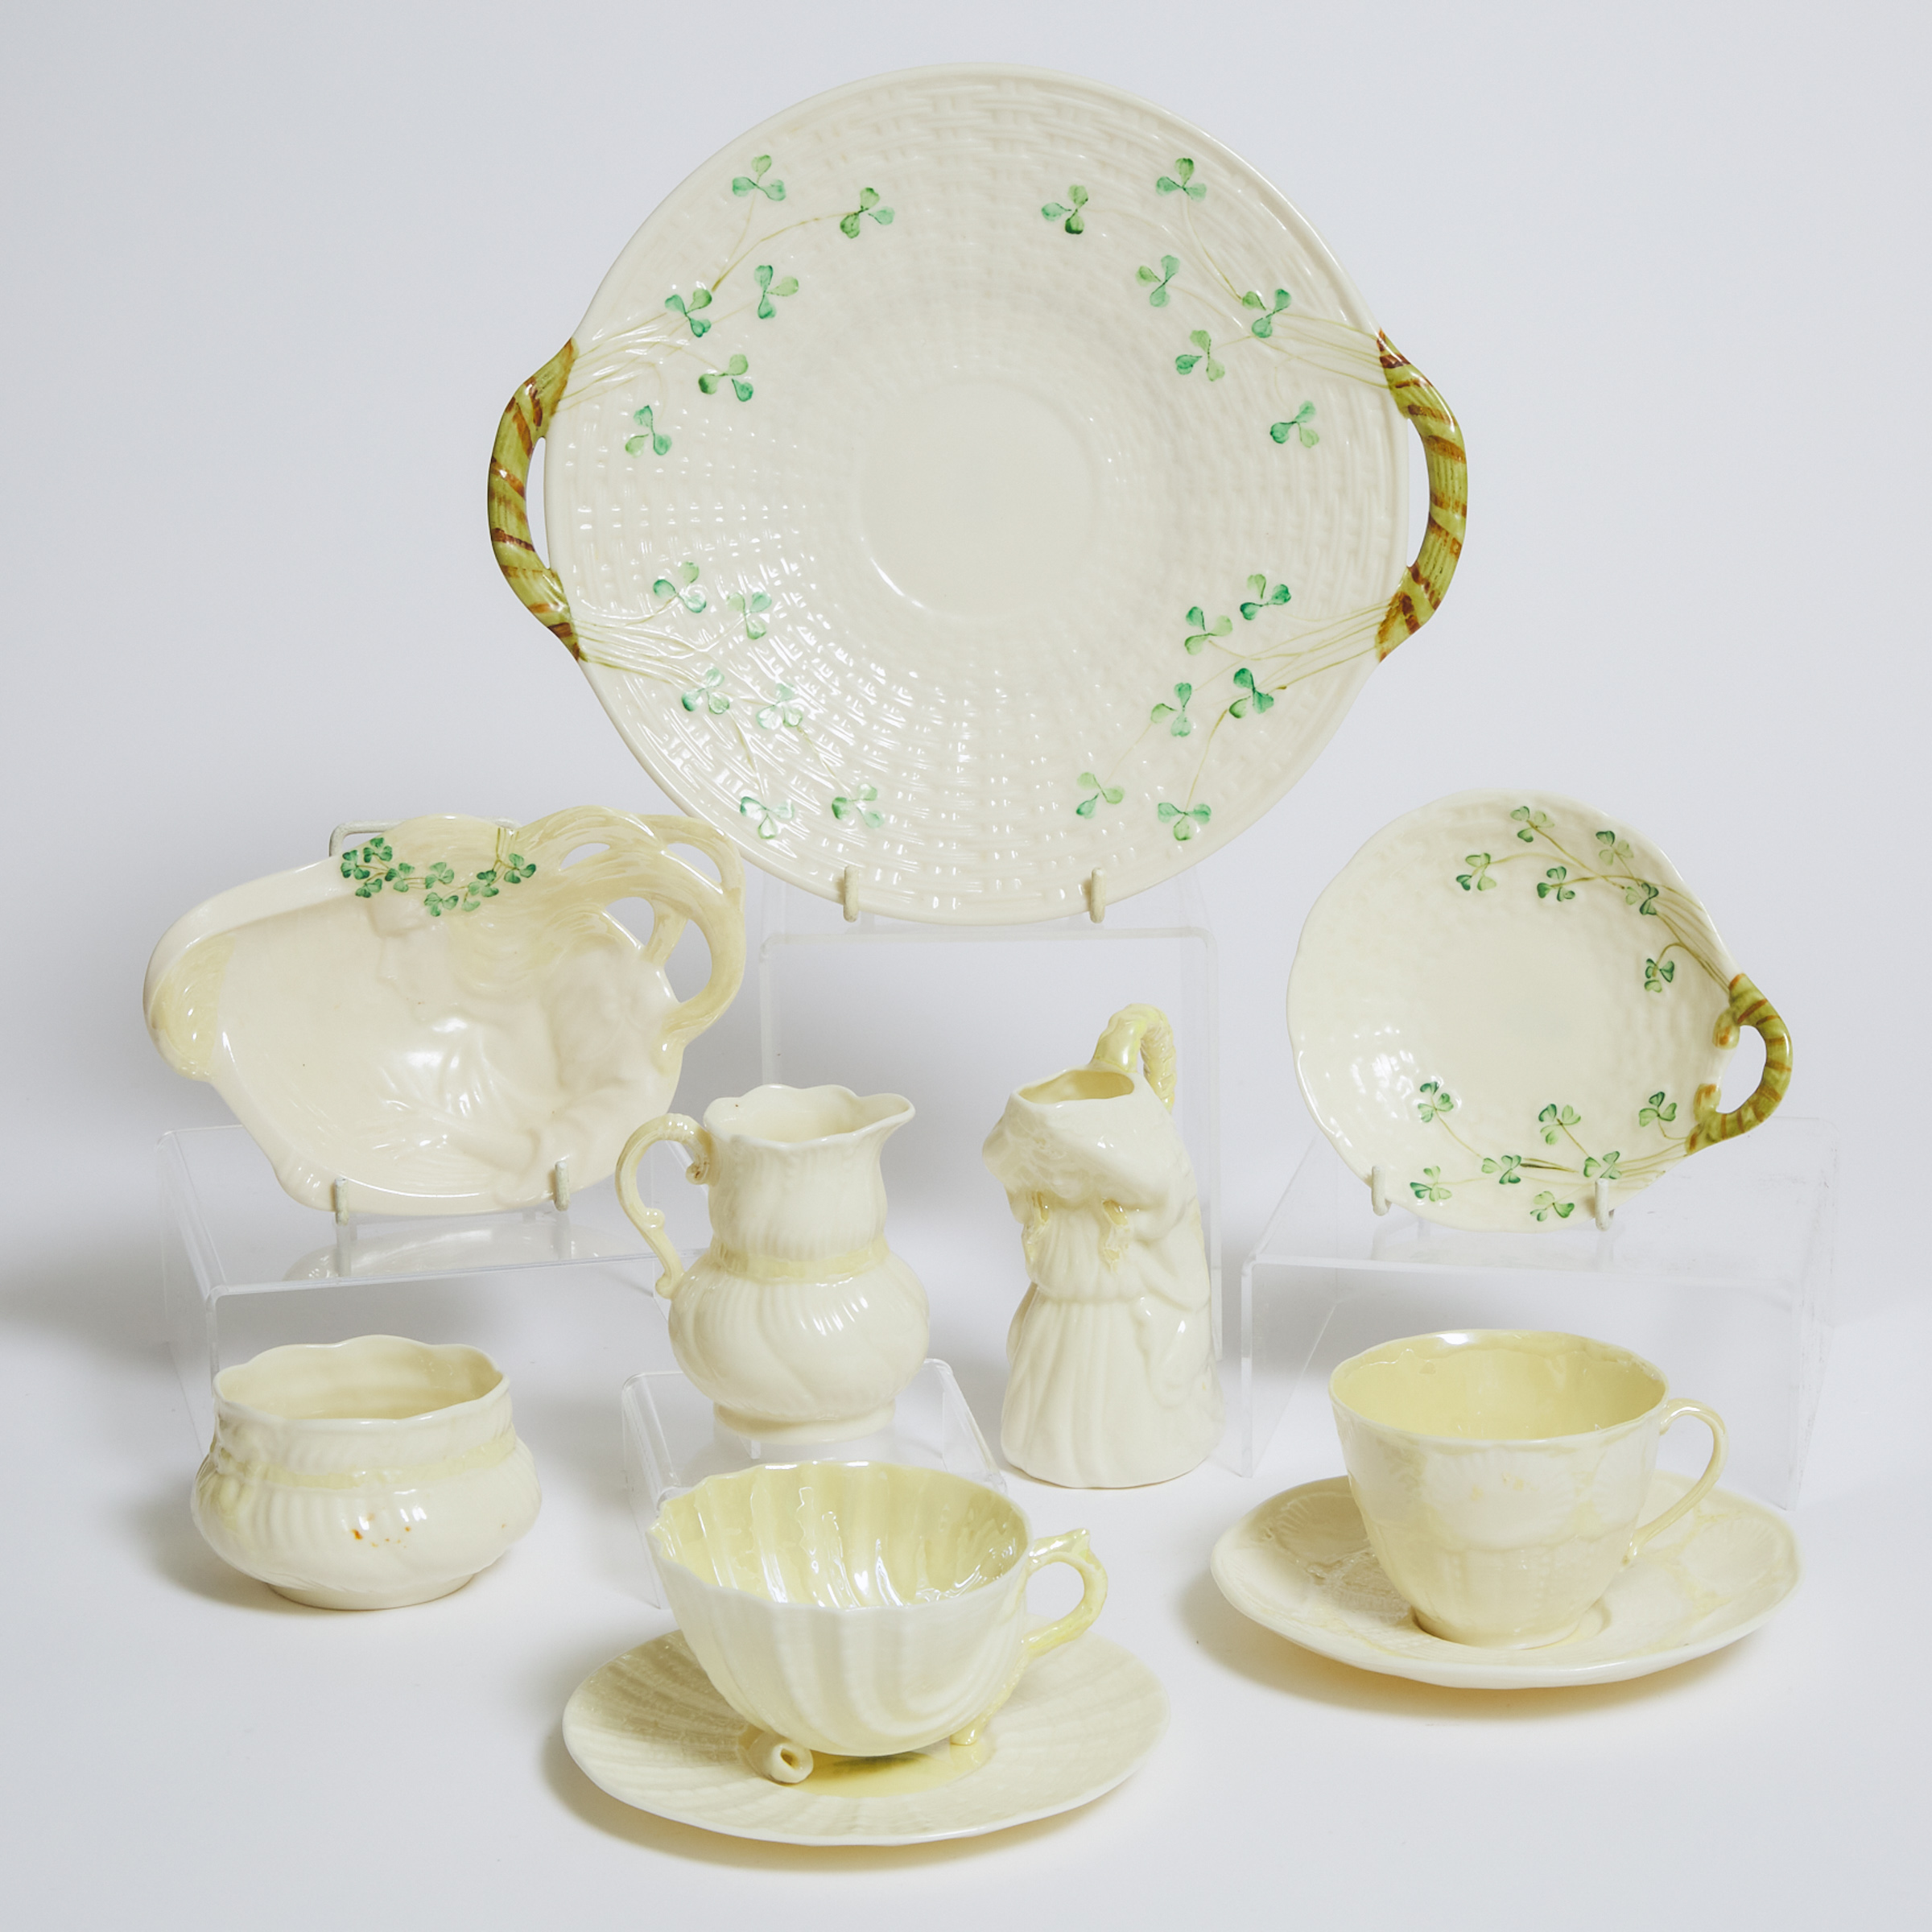 Group of Belleek Porcelain, 20th century